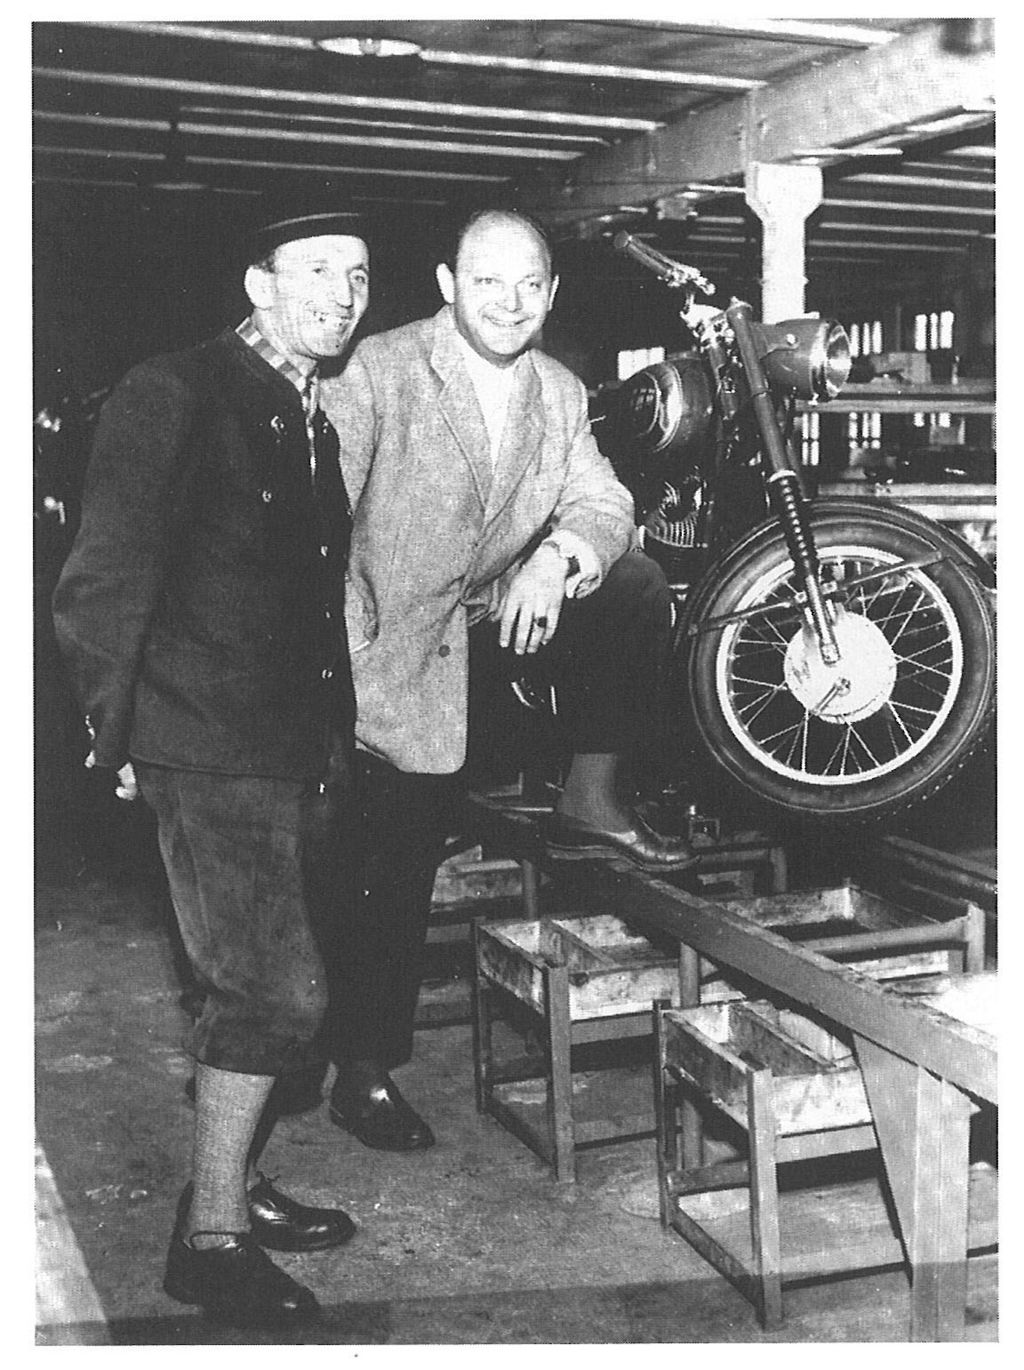 1934 – KTM is born